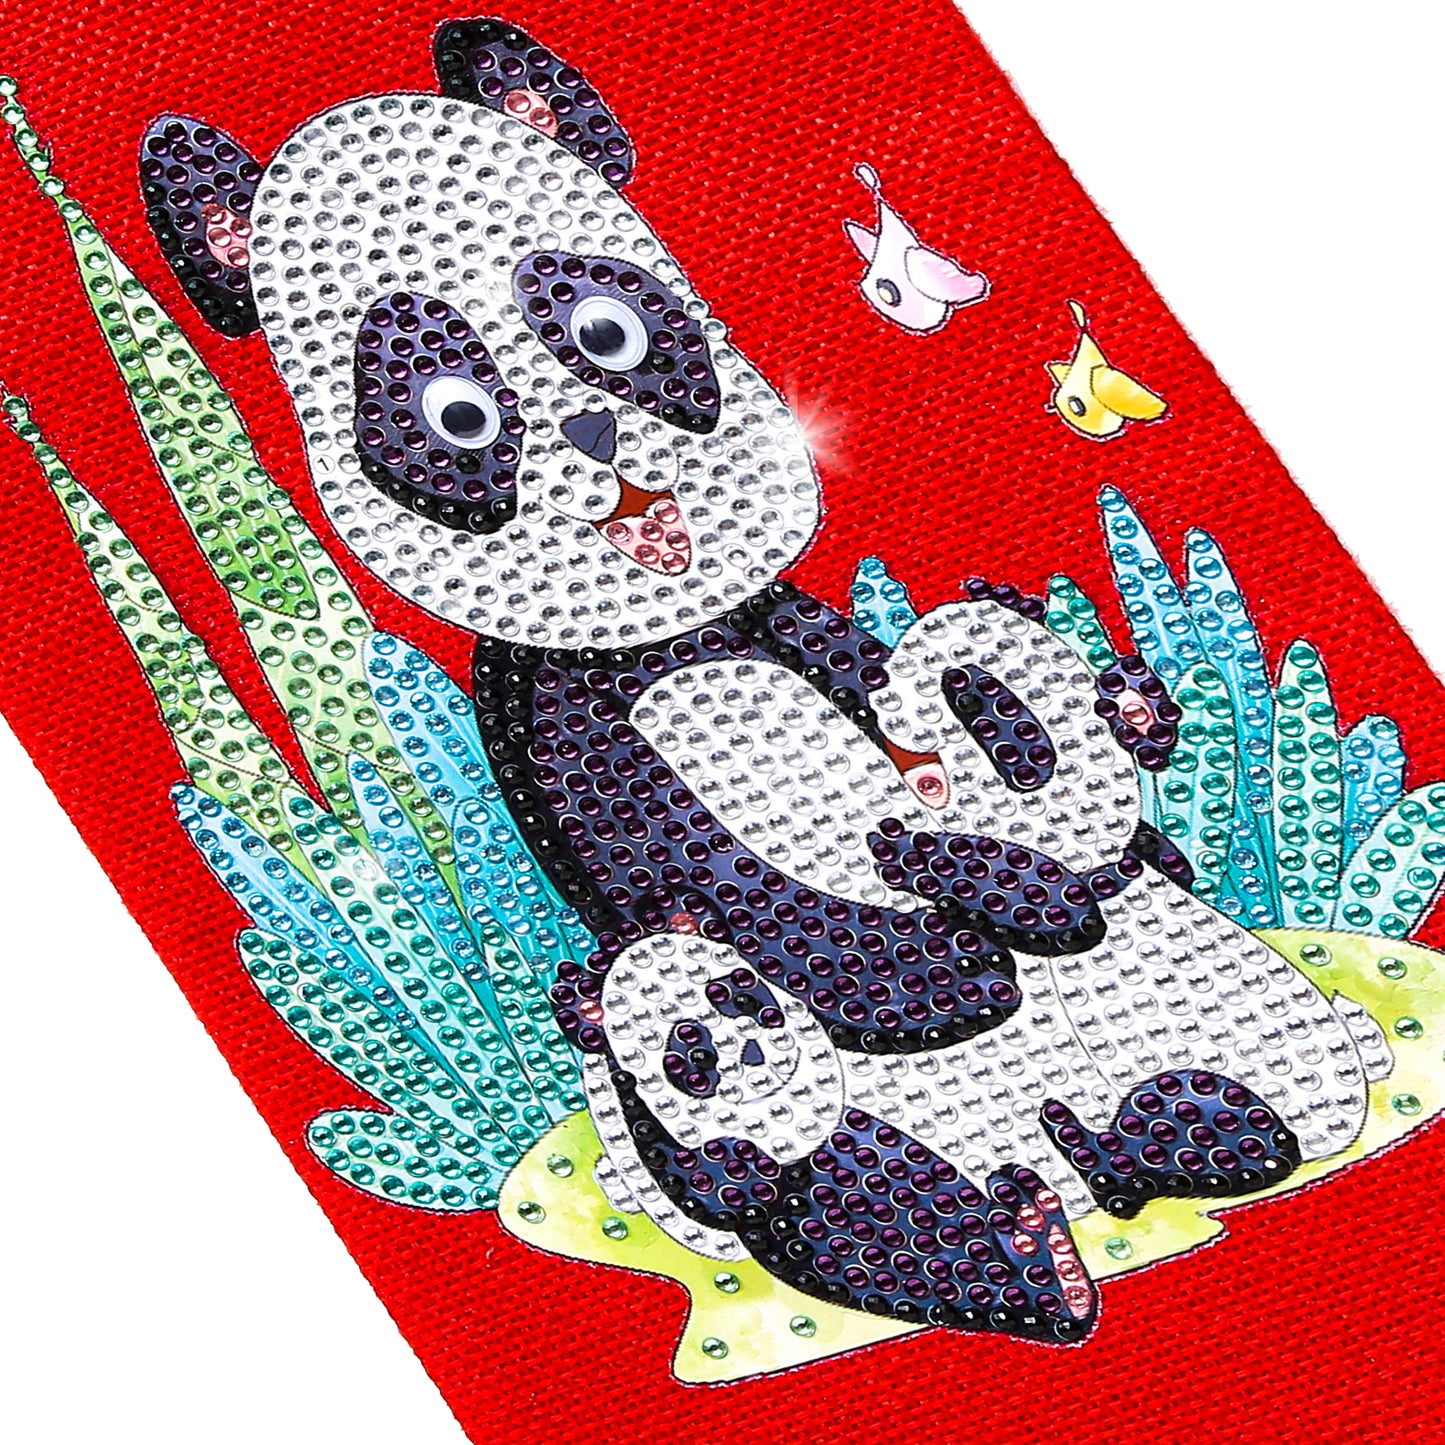 DIY Diamond Christmas Decoration | Panda | Red Wine Gift Bag